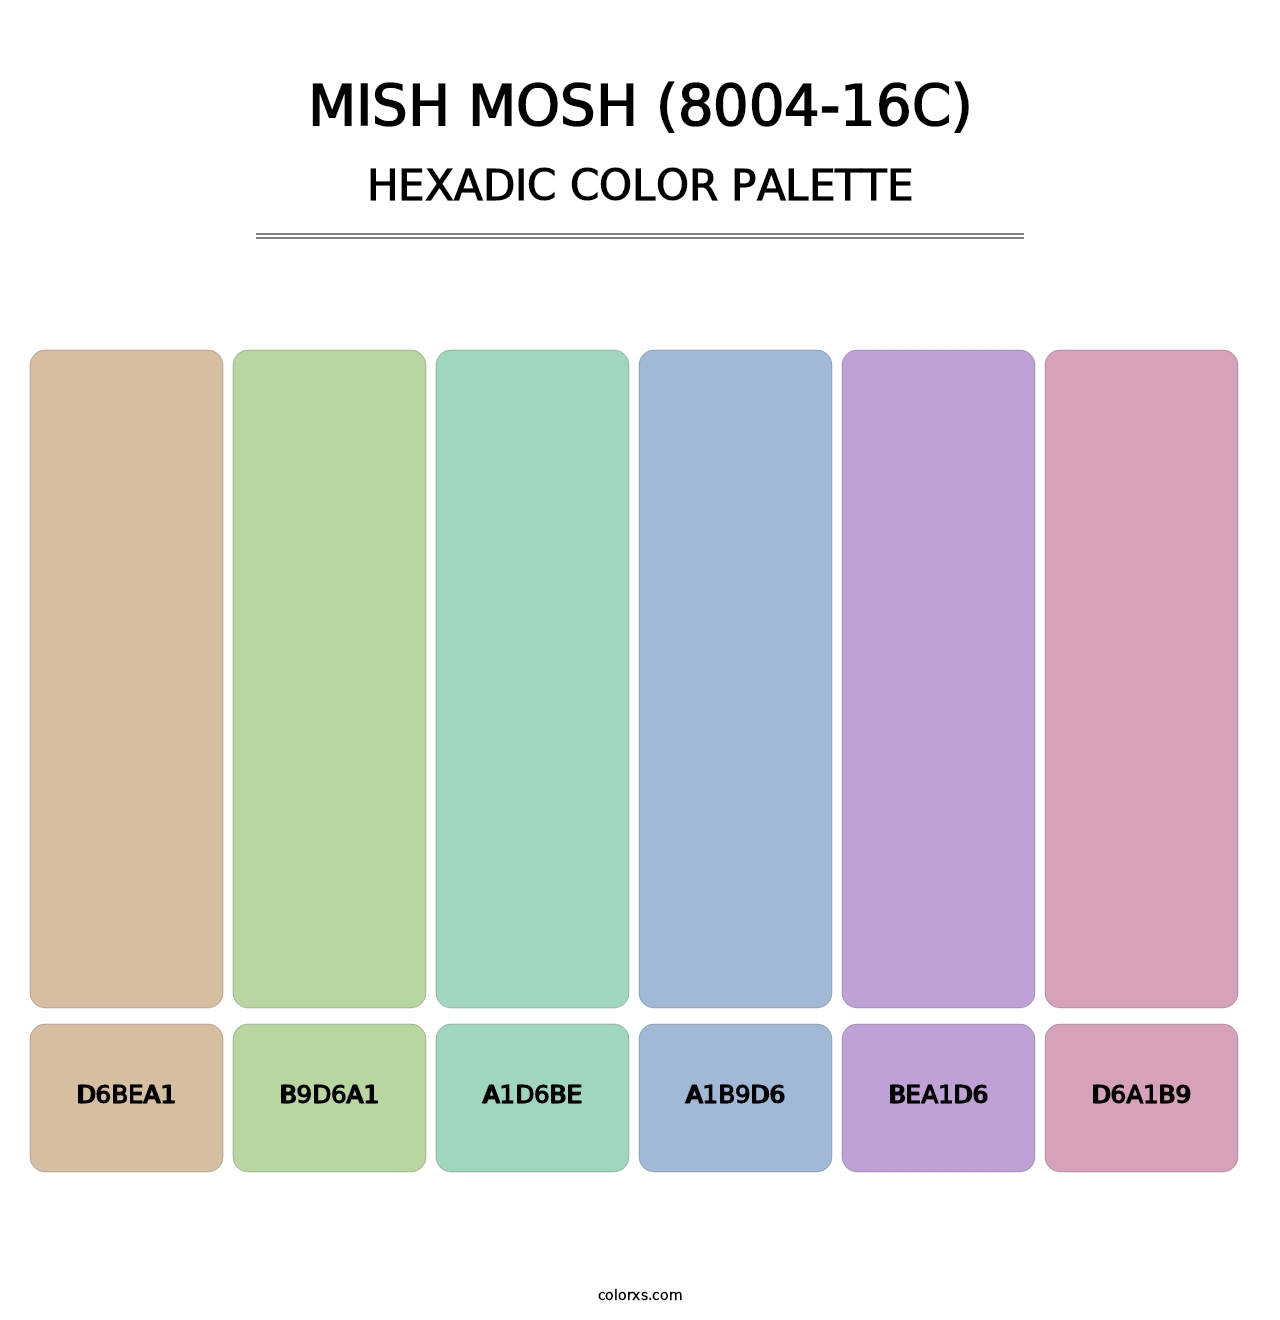 Mish Mosh (8004-16C) - Hexadic Color Palette